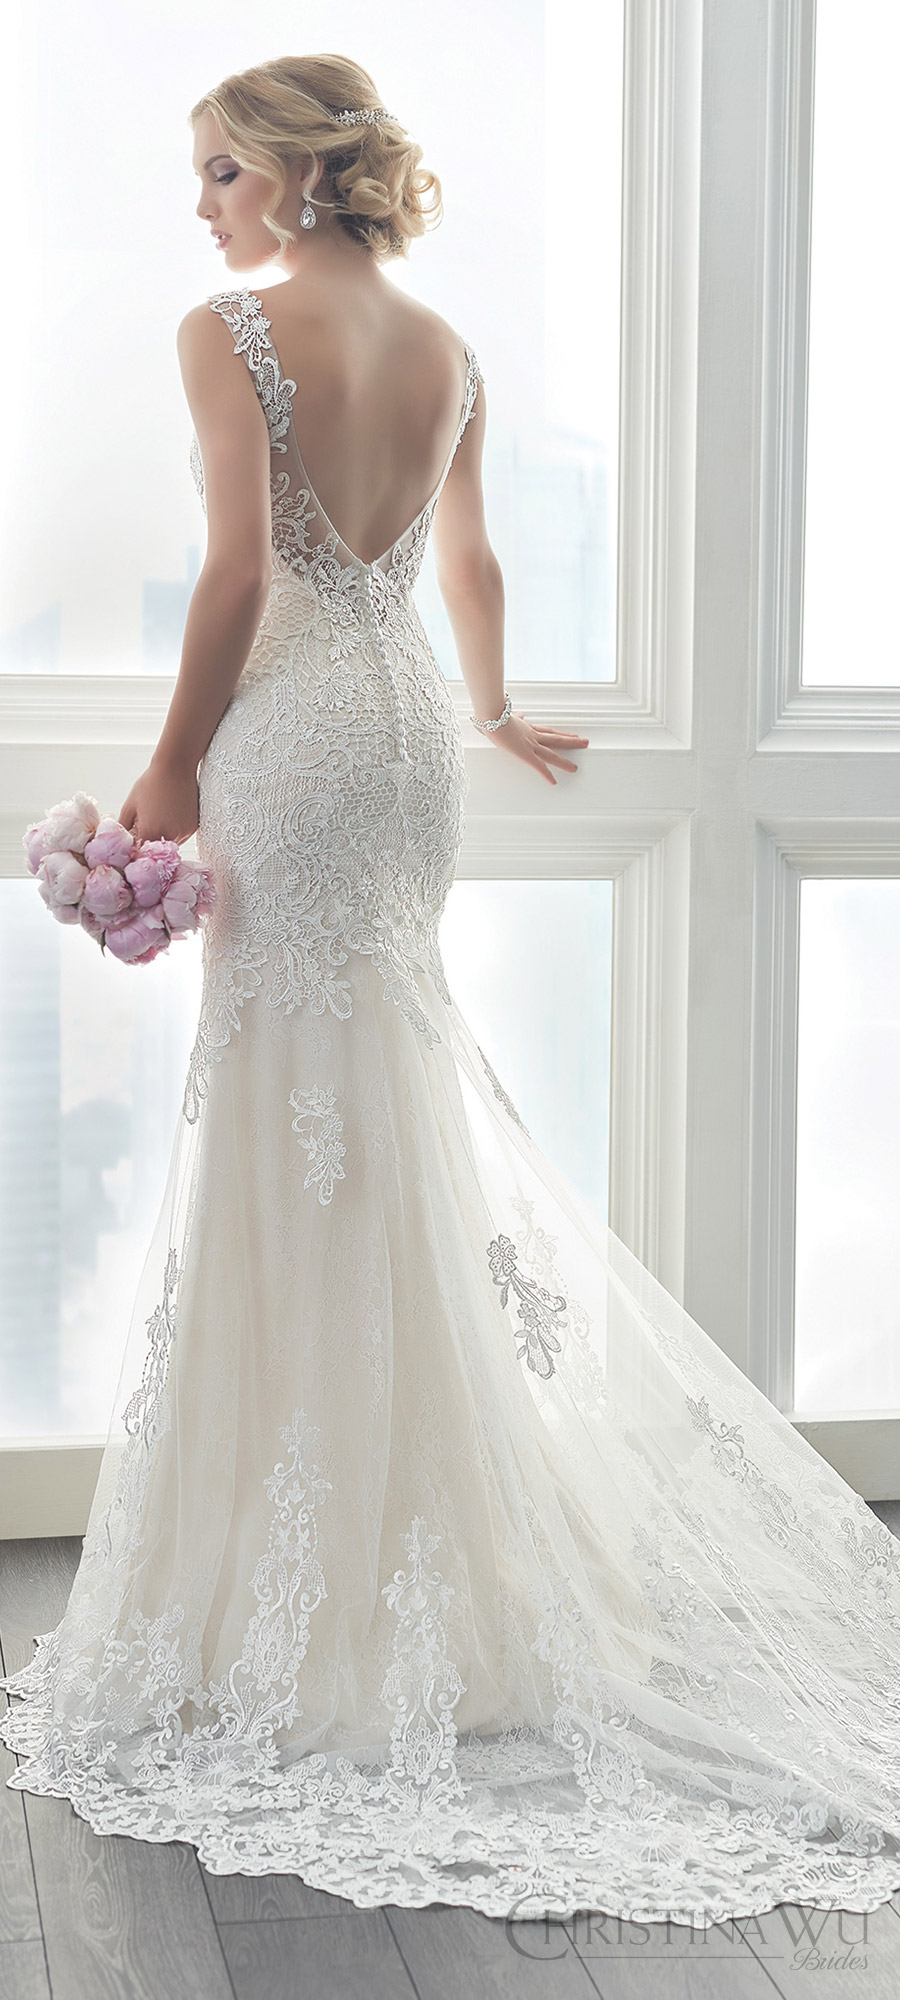 christina wu brides spring 2017 bridal sleeveless illusion straps vneck fully lace embellished trumpet wedding dress (15625) bv train romantic elegant 